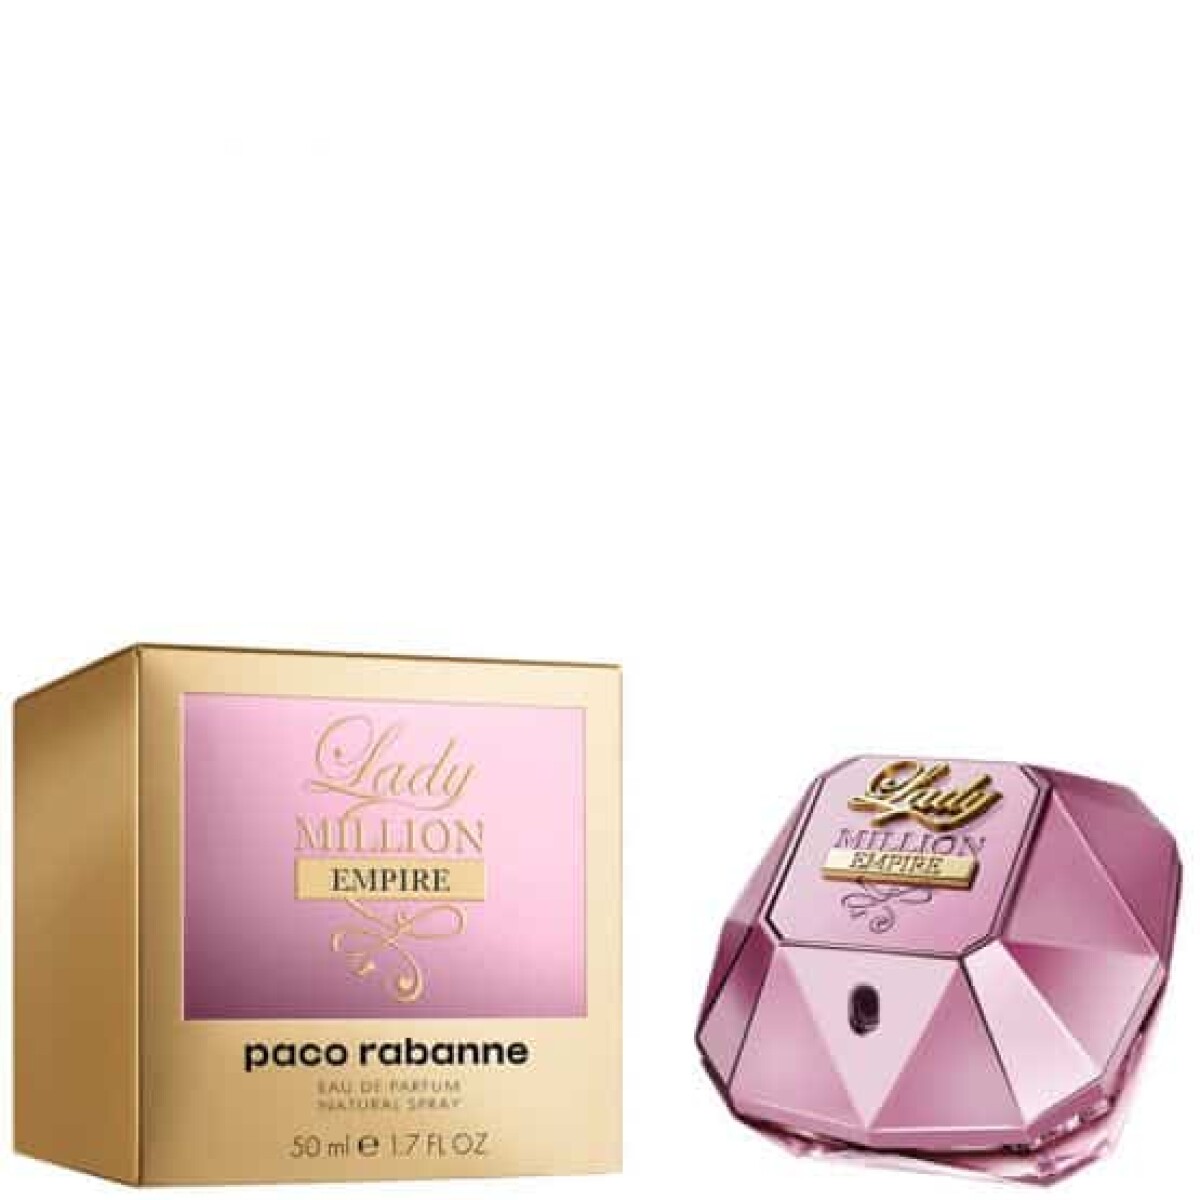 Perfume Paco Rabanne Lady Million Empire Edp 50 ml 